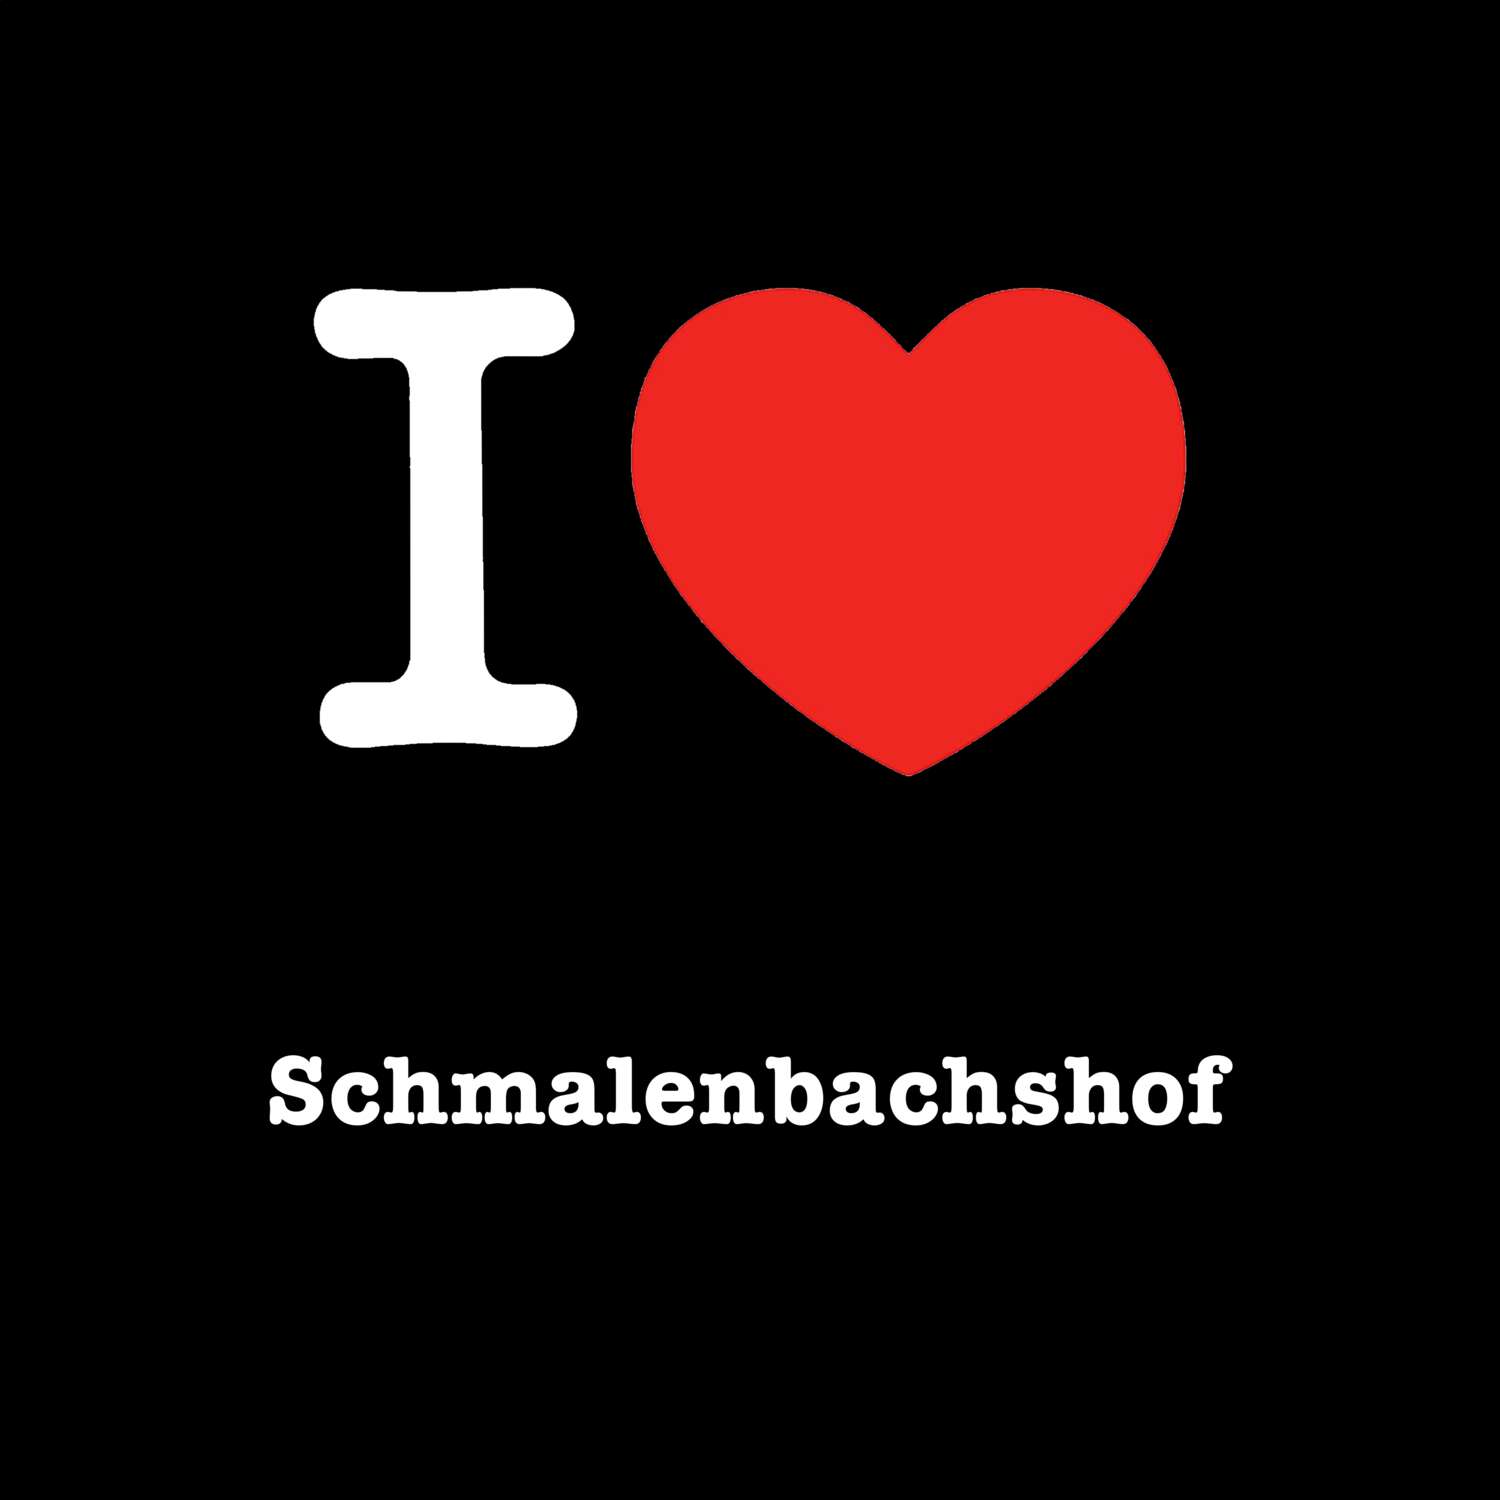 Schmalenbachshof T-Shirt »I love«